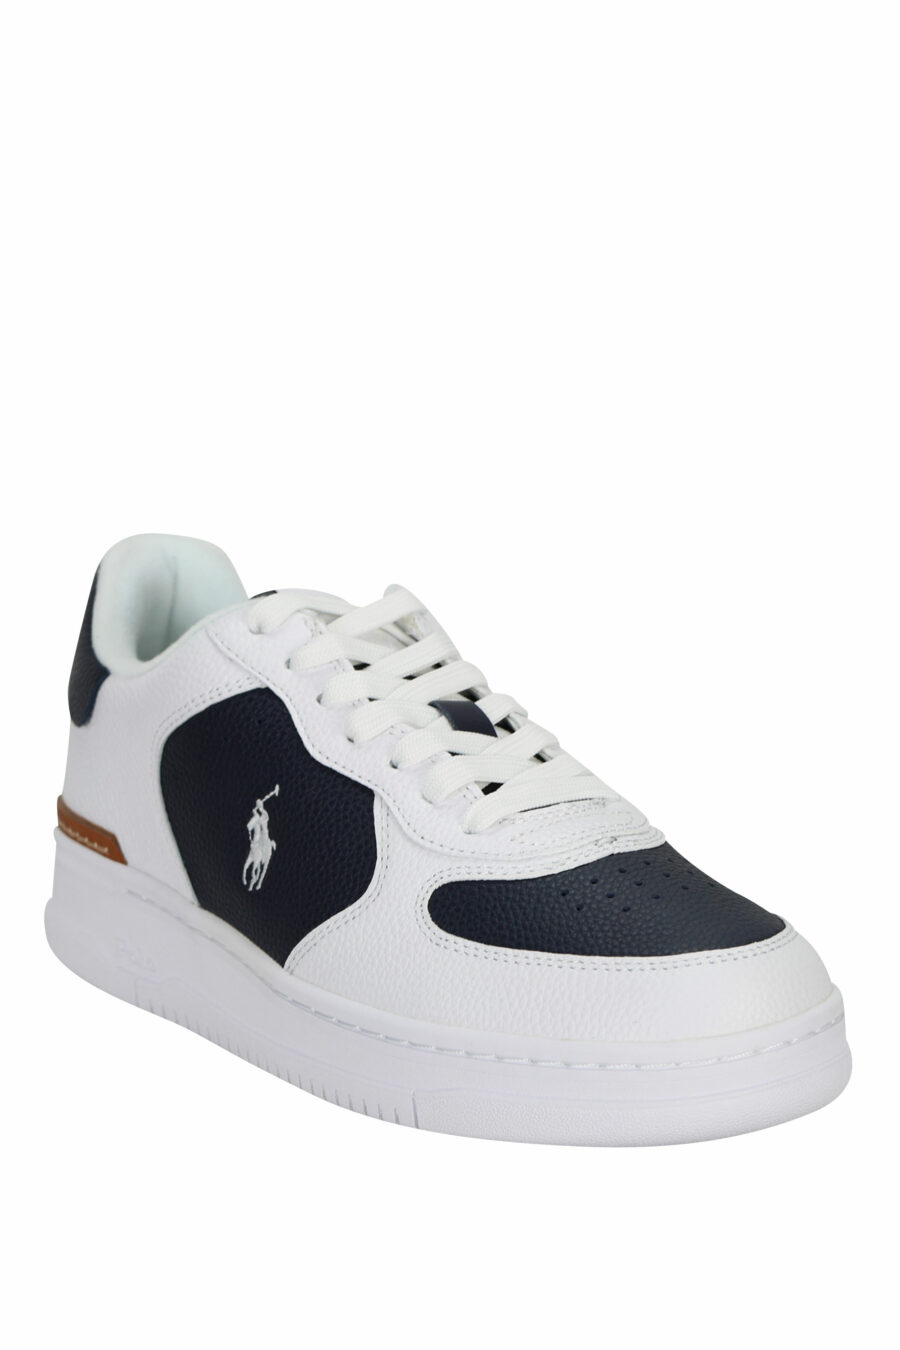 White trainers with dark blue and white mini-logo "polo" - 361653535530096 1